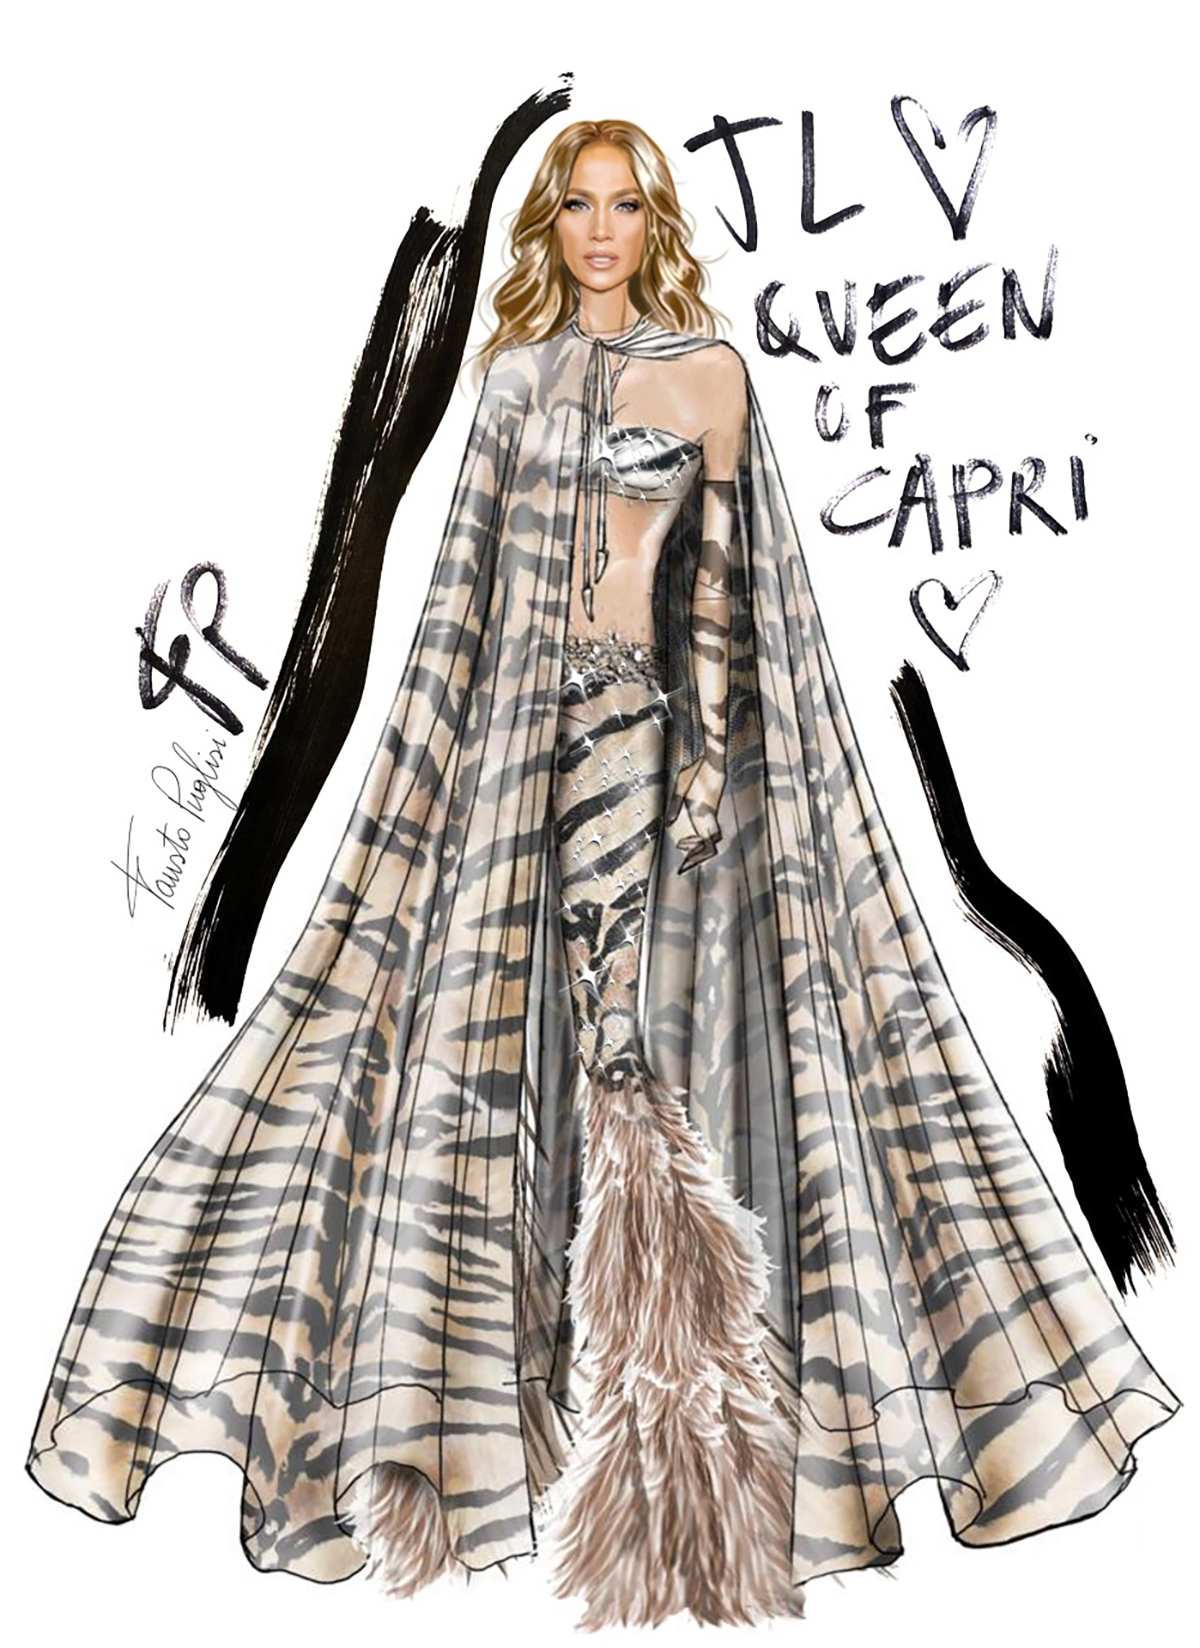 A sketch of Jennifer Lopez wearing a zebra print dress